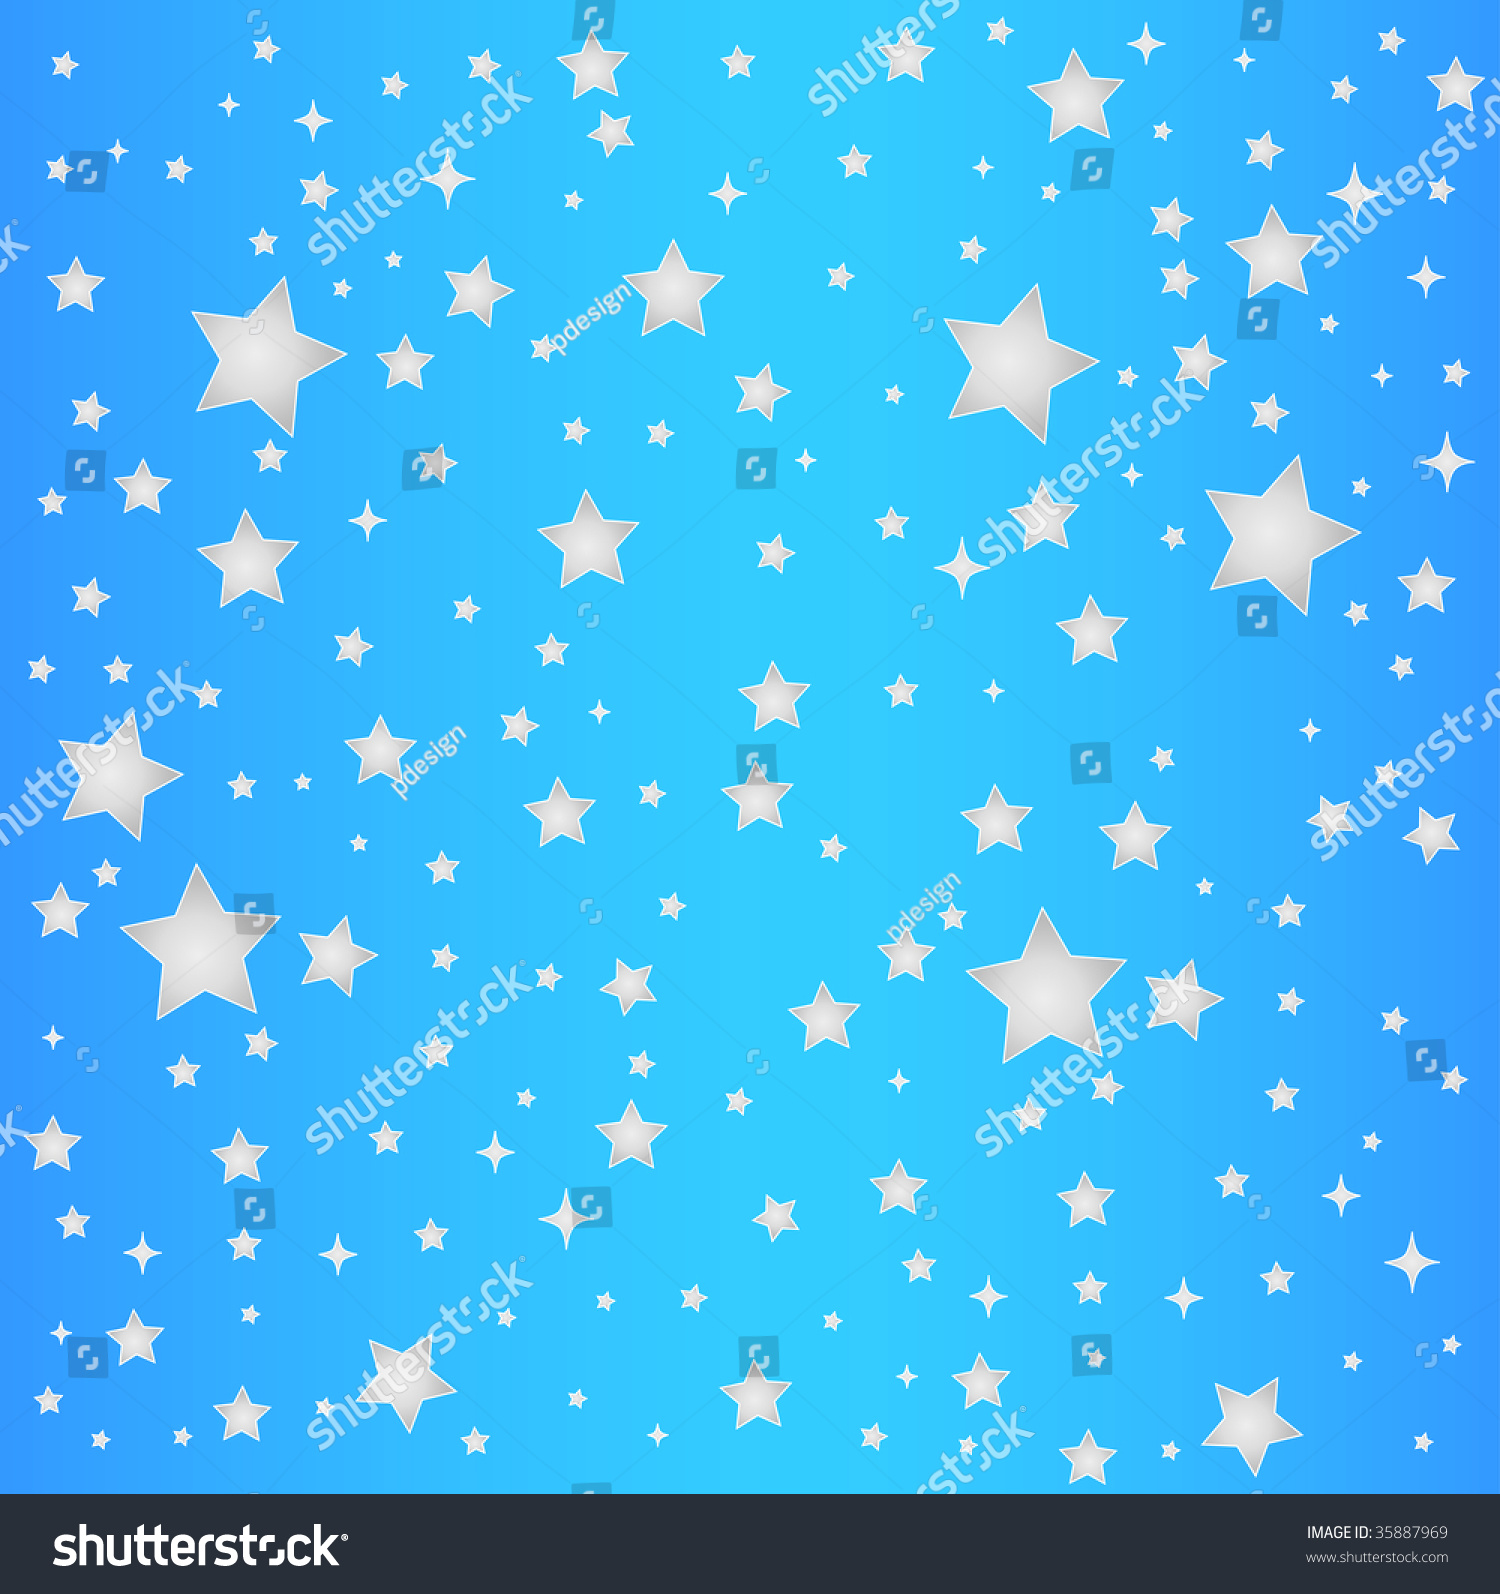 A Illustration Of A Sky Blue Star Background - 35887969 : Shutterstock